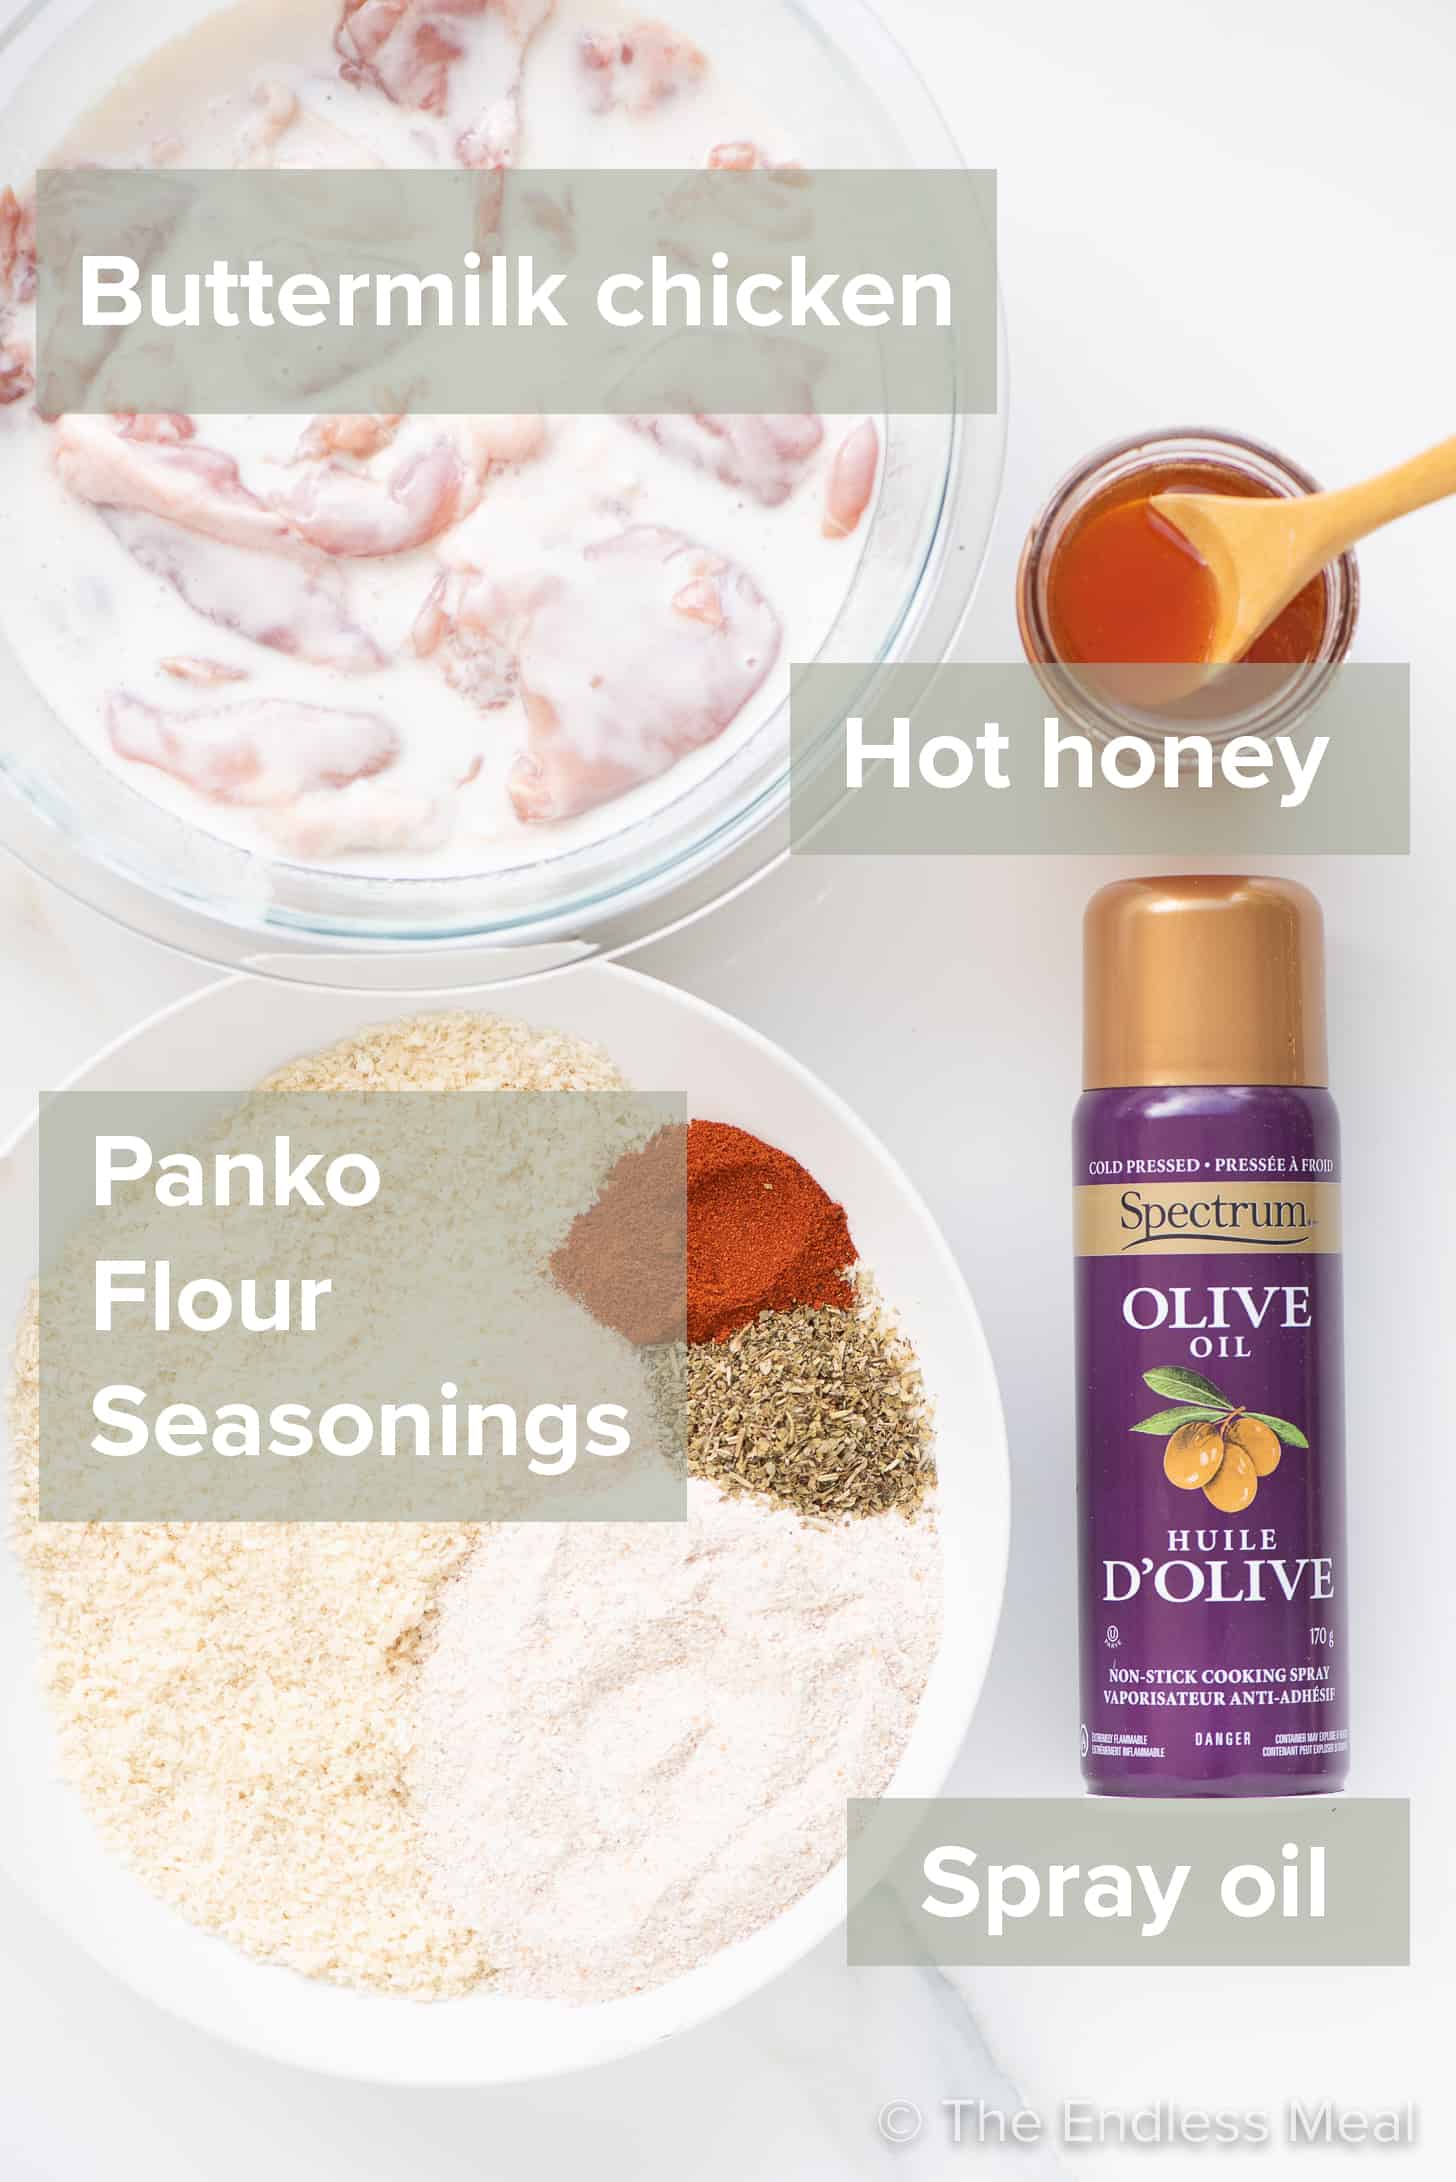 The ingredients to make Hot Honey Chicken.